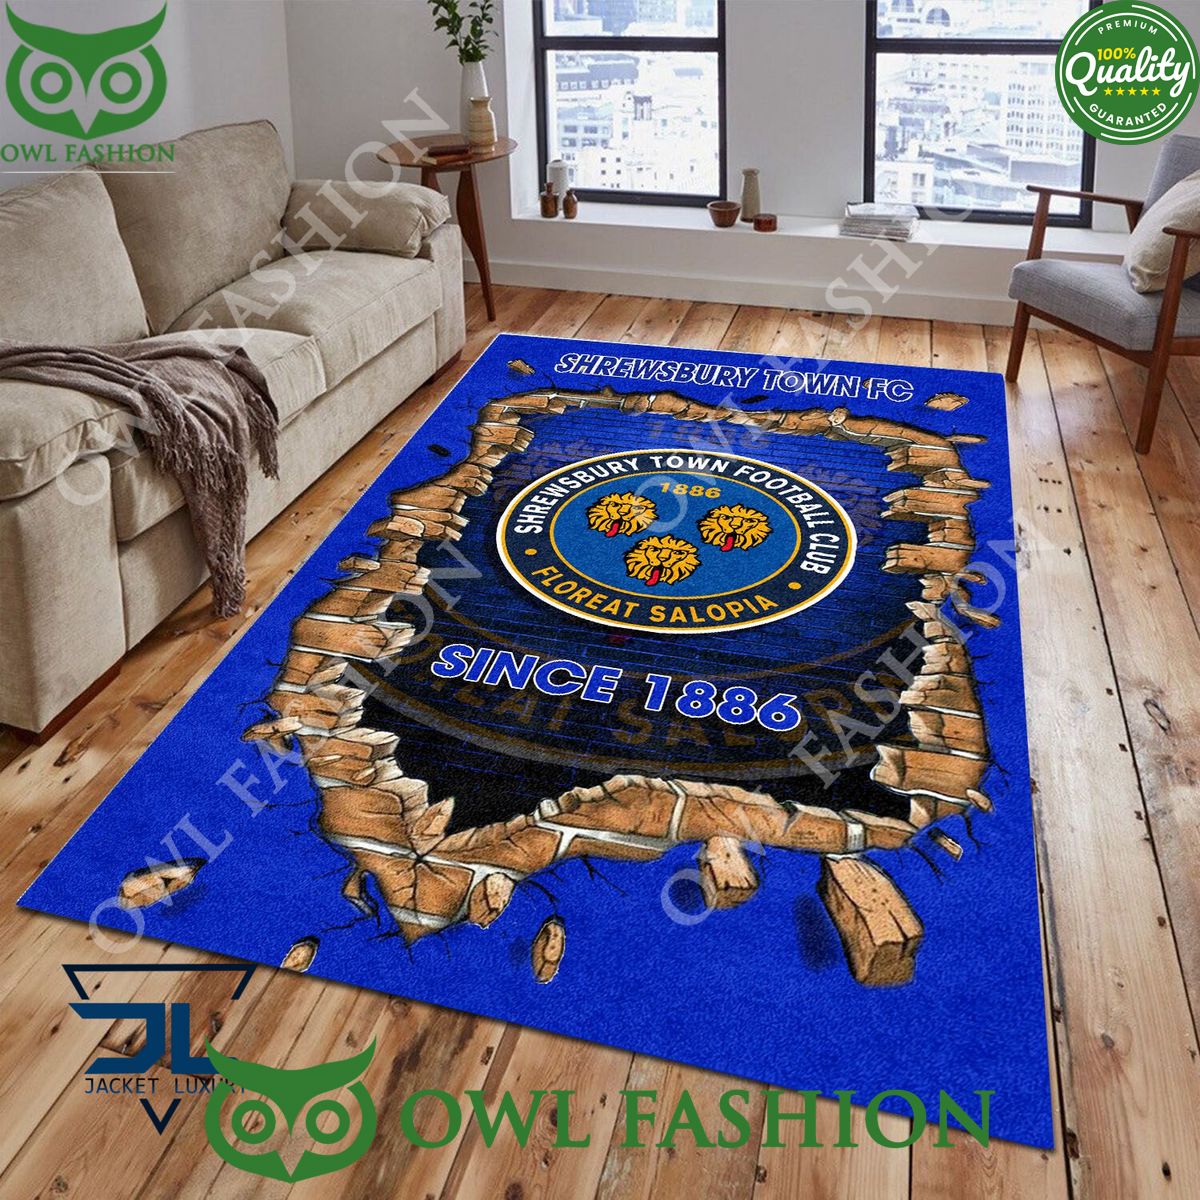 Shrewsbury Town 1838 League Two Living Room Rug Carpet